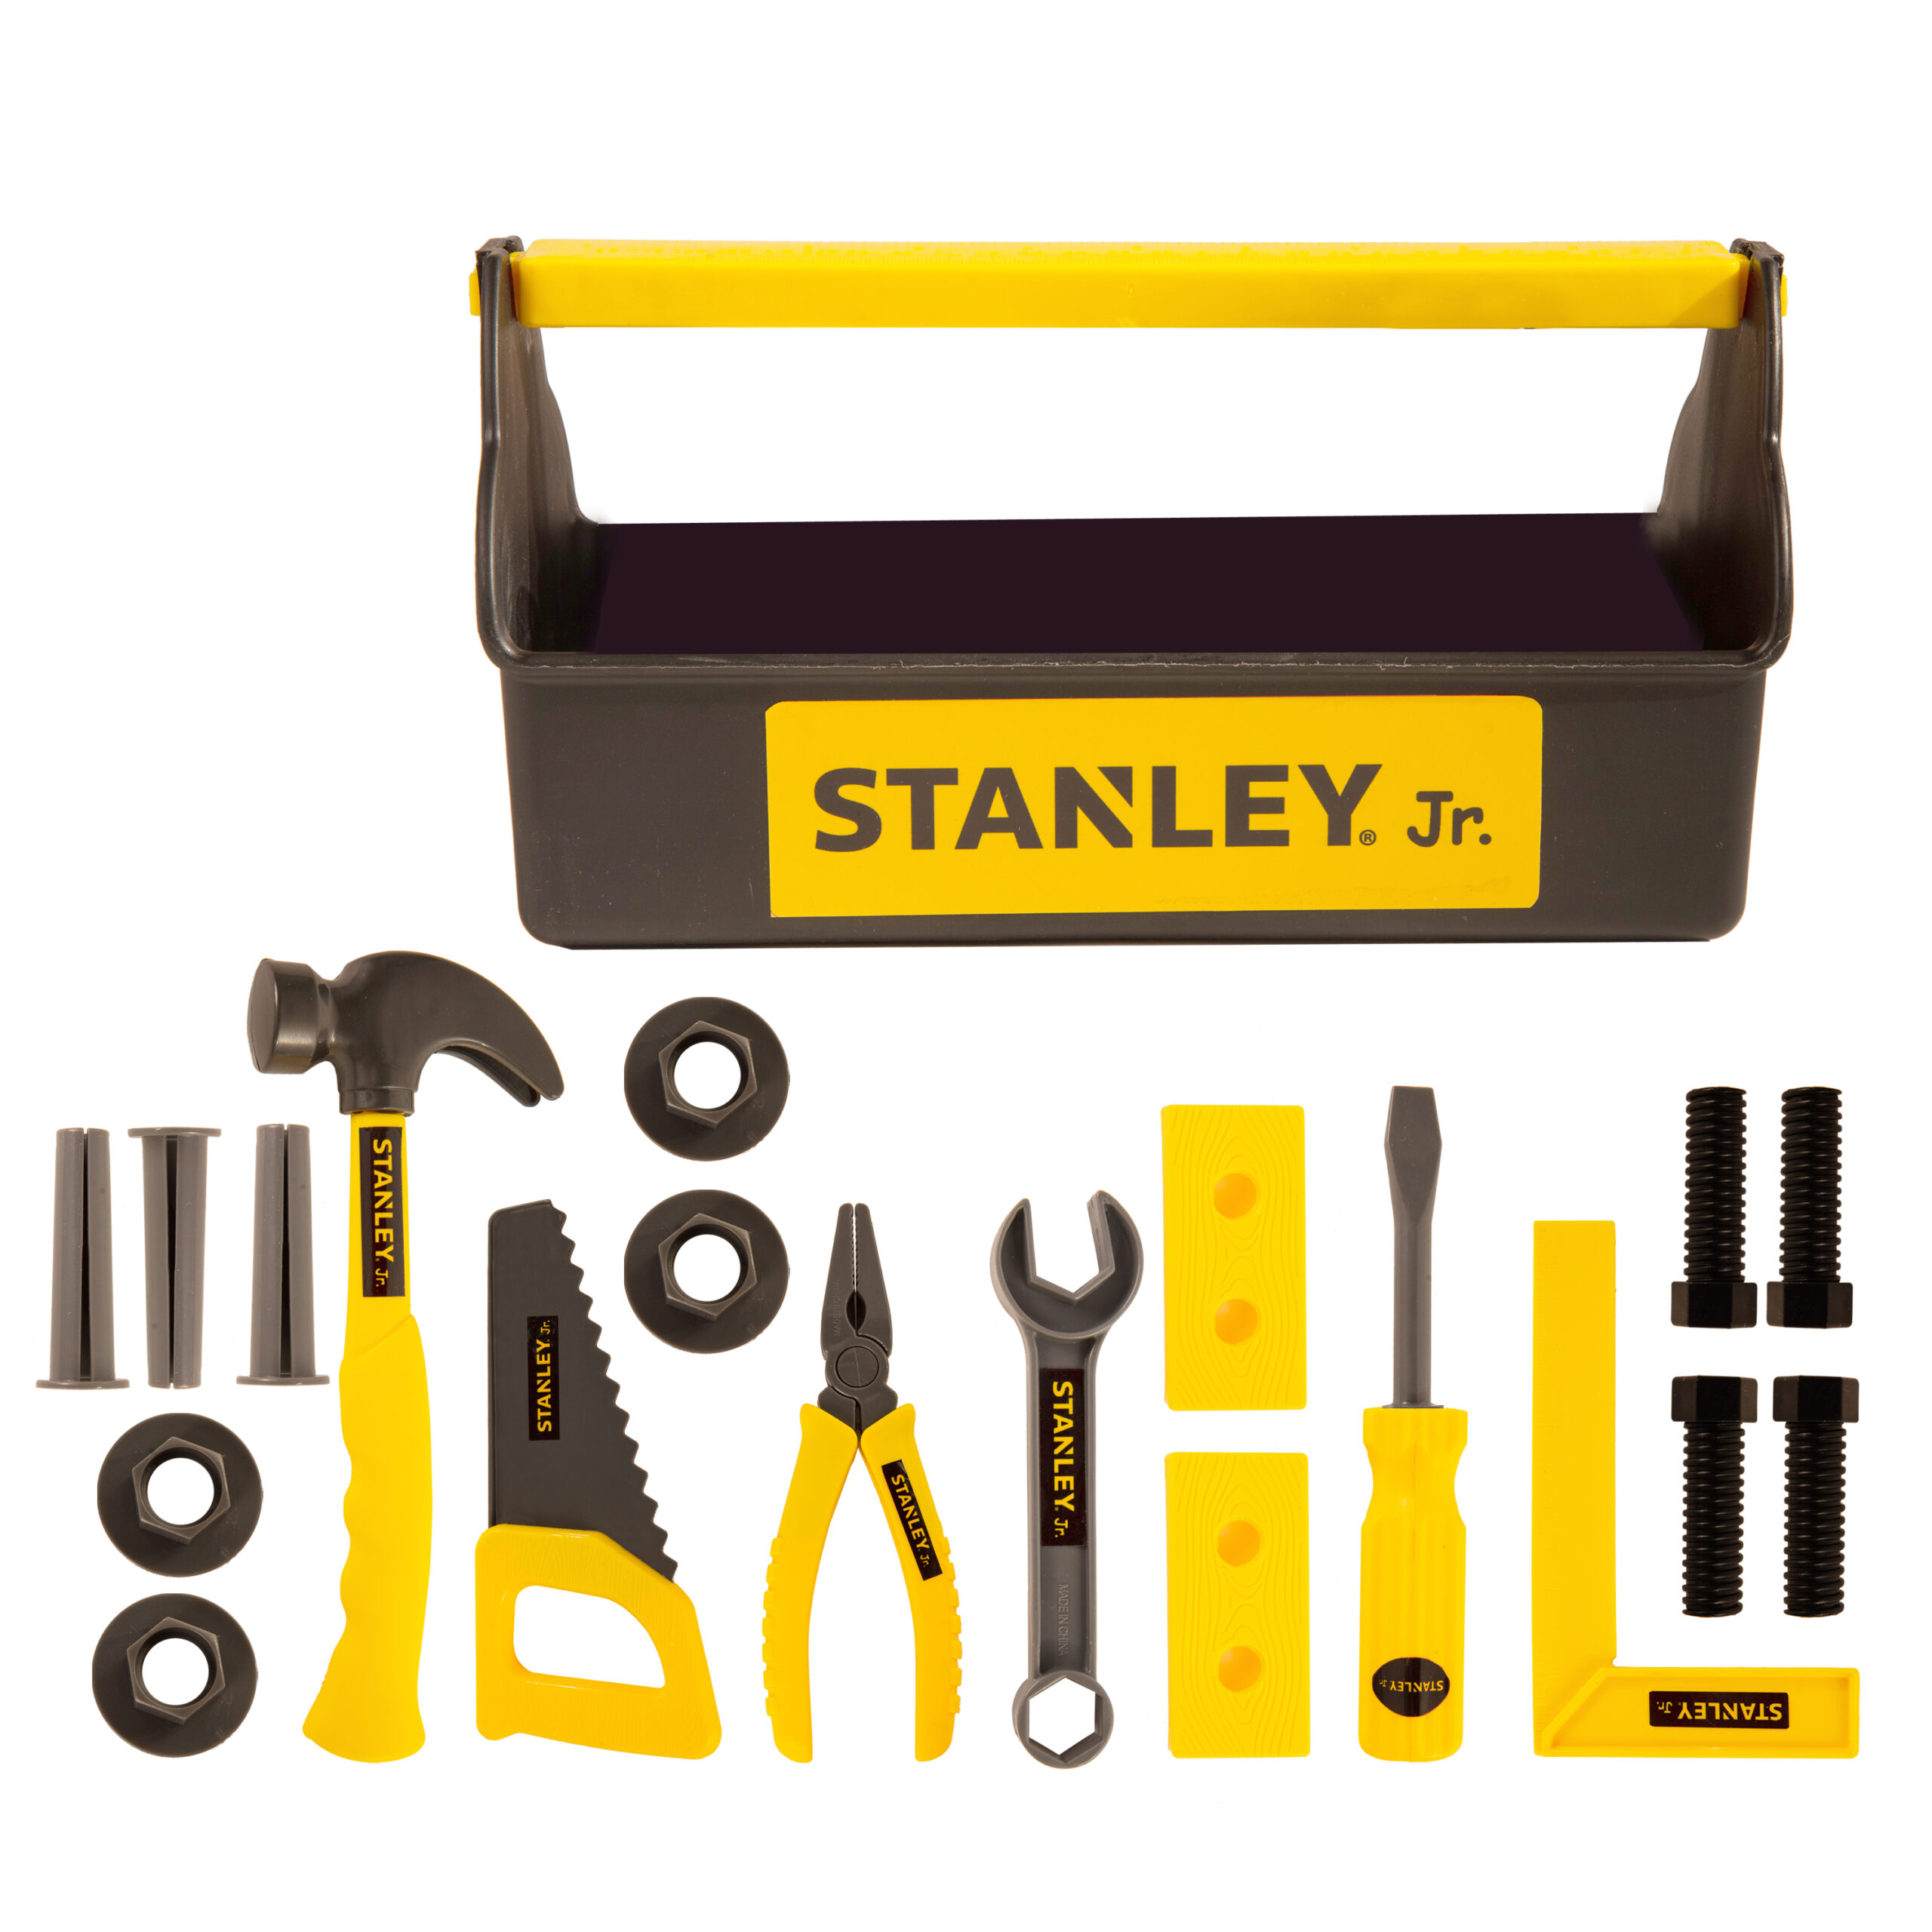 Stanley Jr. 20 Piece Toolset - STANLEYjr